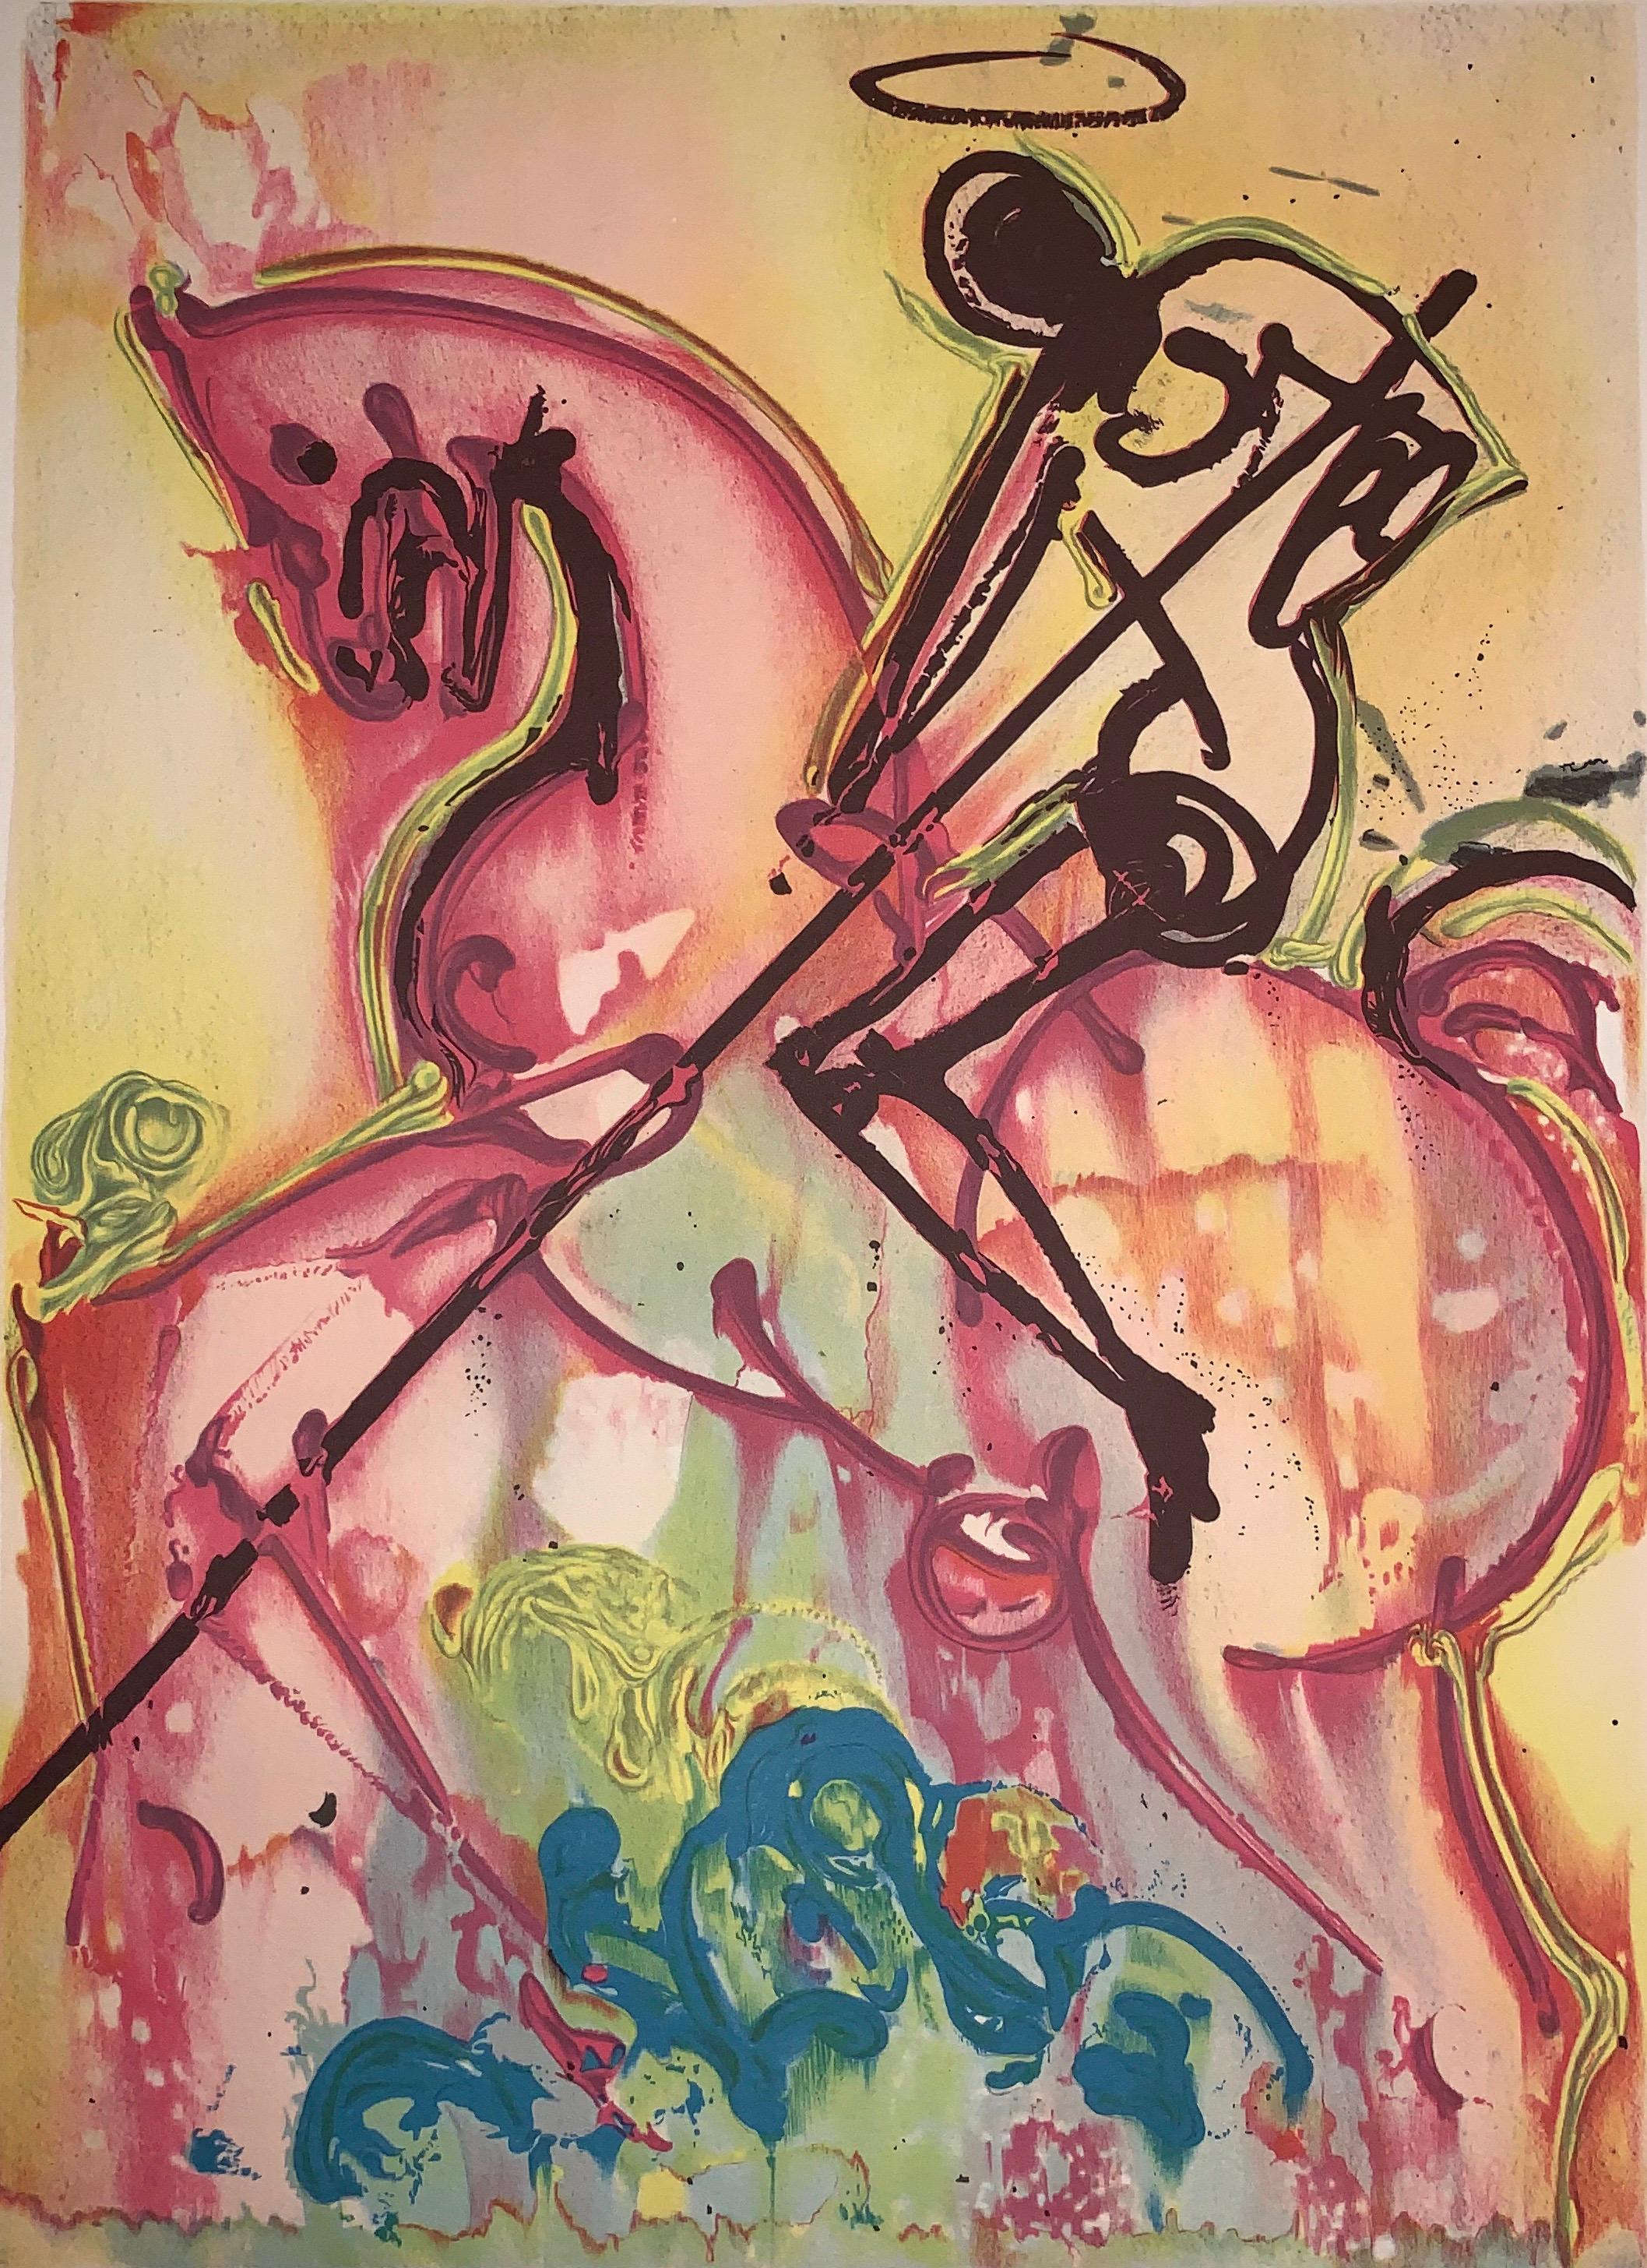 (after) Salvador Dali Figurative Print - Saint-Georges - The horses of Dali - Lithograph - Surrealist - 1983